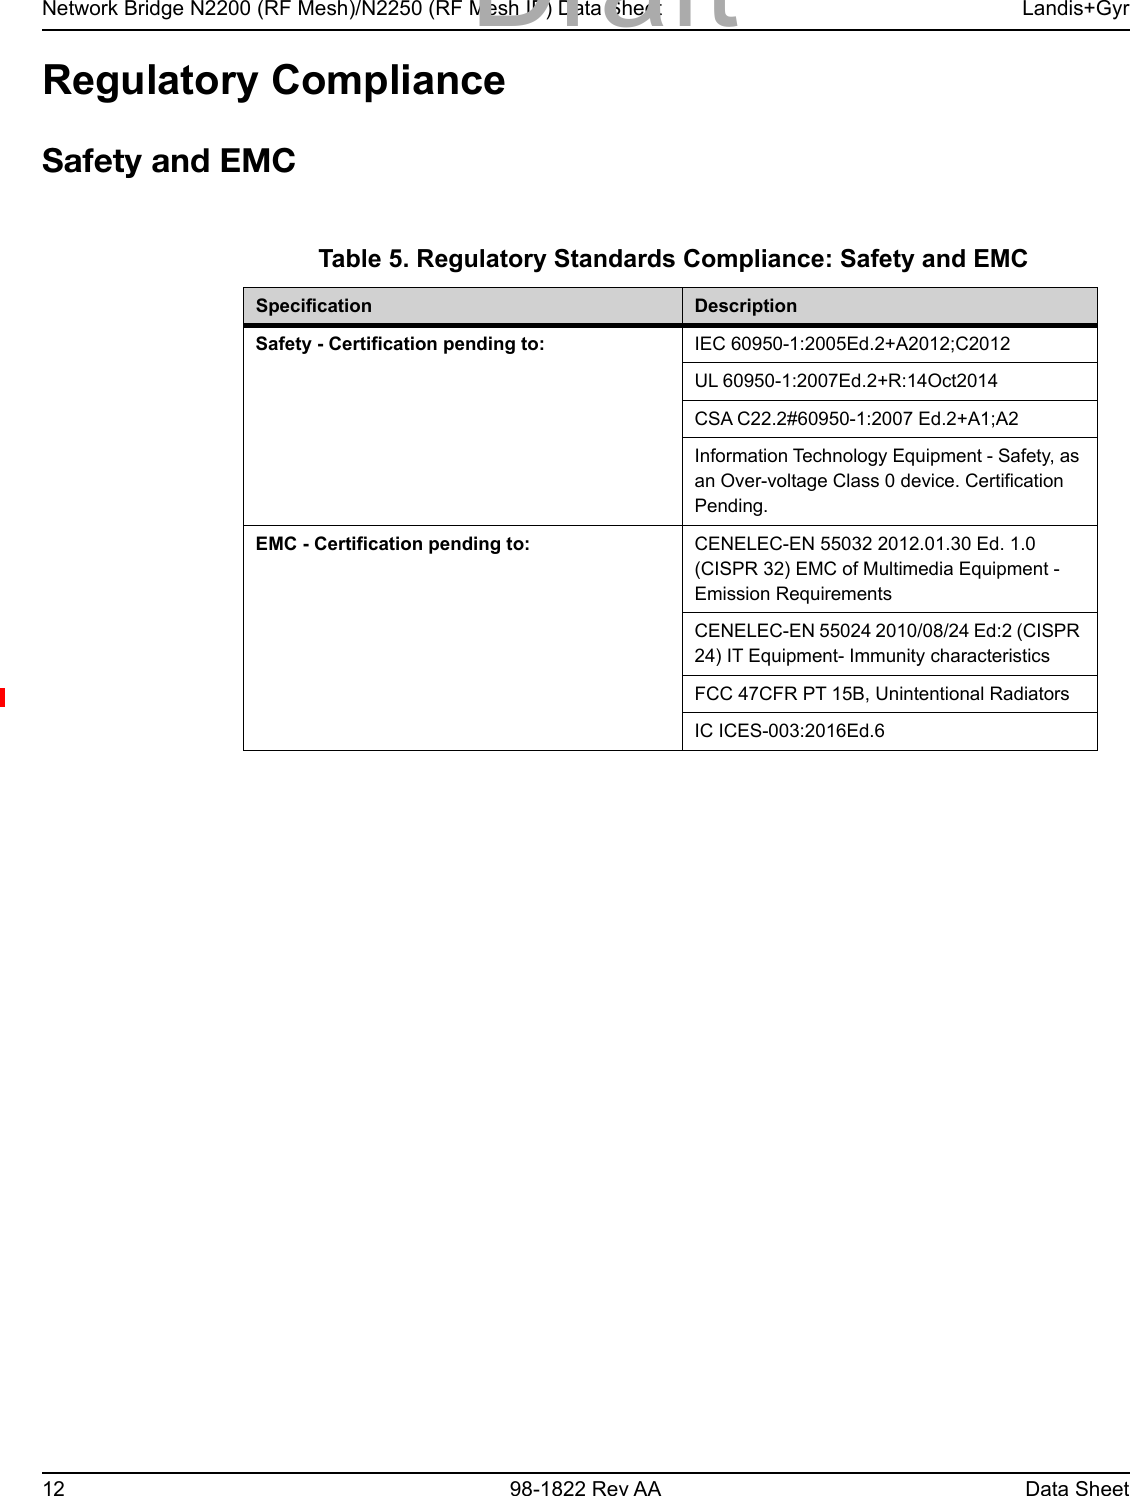 Network Bridge N2200 (RF Mesh)/N2250 (RF Mesh IP) Data Sheet Landis+Gyr12 98-1822 Rev AA Data SheetRegulatory Compliance Safety and EMC Table 5. Regulatory Standards Compliance: Safety and EMCSpecification DescriptionSafety - Certification pending to: IEC 60950-1:2005Ed.2+A2012;C2012UL 60950-1:2007Ed.2+R:14Oct2014CSA C22.2#60950-1:2007 Ed.2+A1;A2Information Technology Equipment - Safety, as an Over-voltage Class 0 device. Certification Pending.EMC - Certification pending to:  CENELEC-EN 55032 2012.01.30 Ed. 1.0 (CISPR 32) EMC of Multimedia Equipment - Emission RequirementsCENELEC-EN 55024 2010/08/24 Ed:2 (CISPR 24) IT Equipment- Immunity characteristicsFCC 47CFR PT 15B, Unintentional RadiatorsIC ICES-003:2016Ed.6Draft